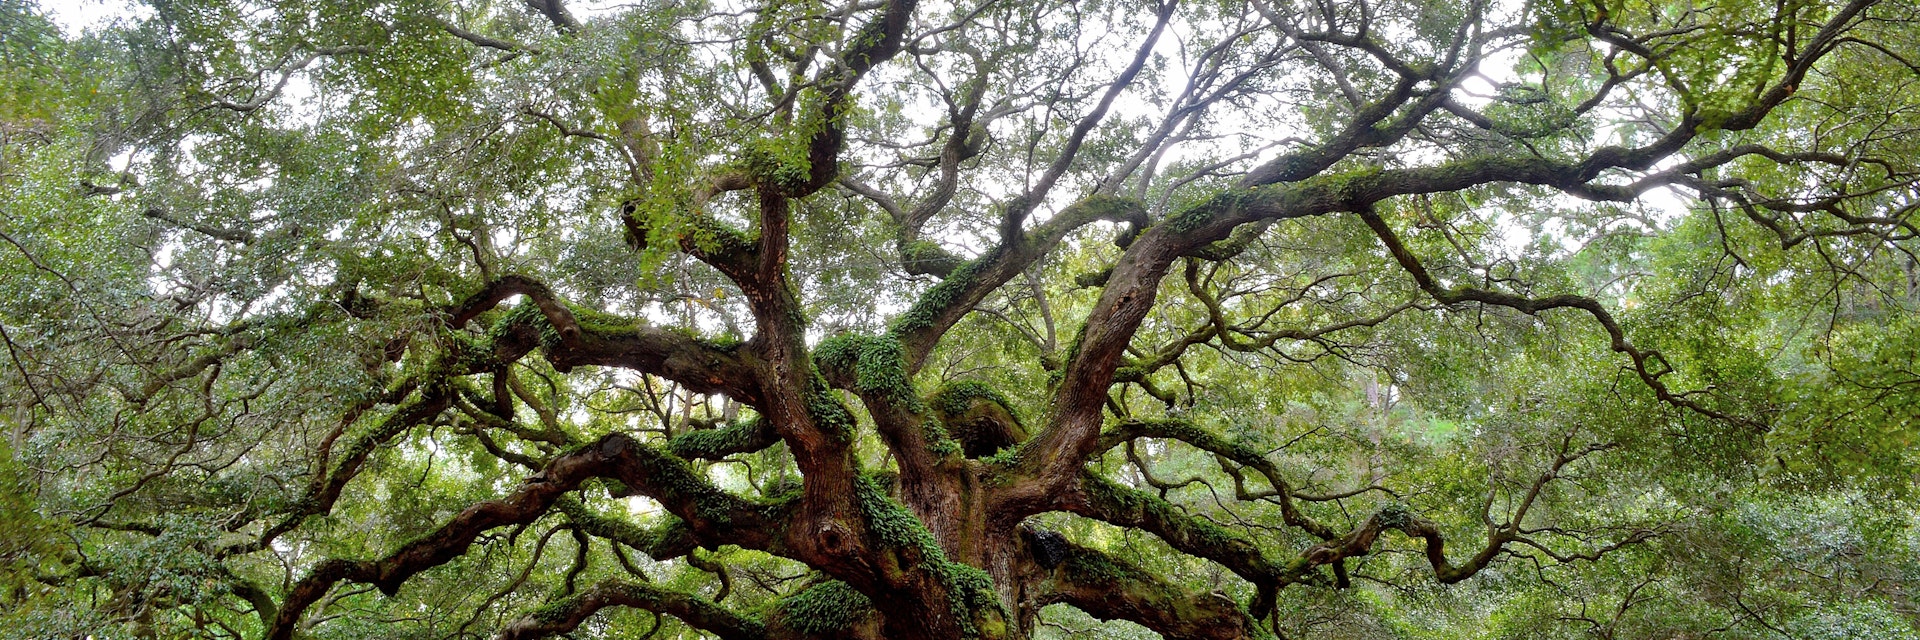 Angel Oak tree on St. Johns Island near Charleston, SC.